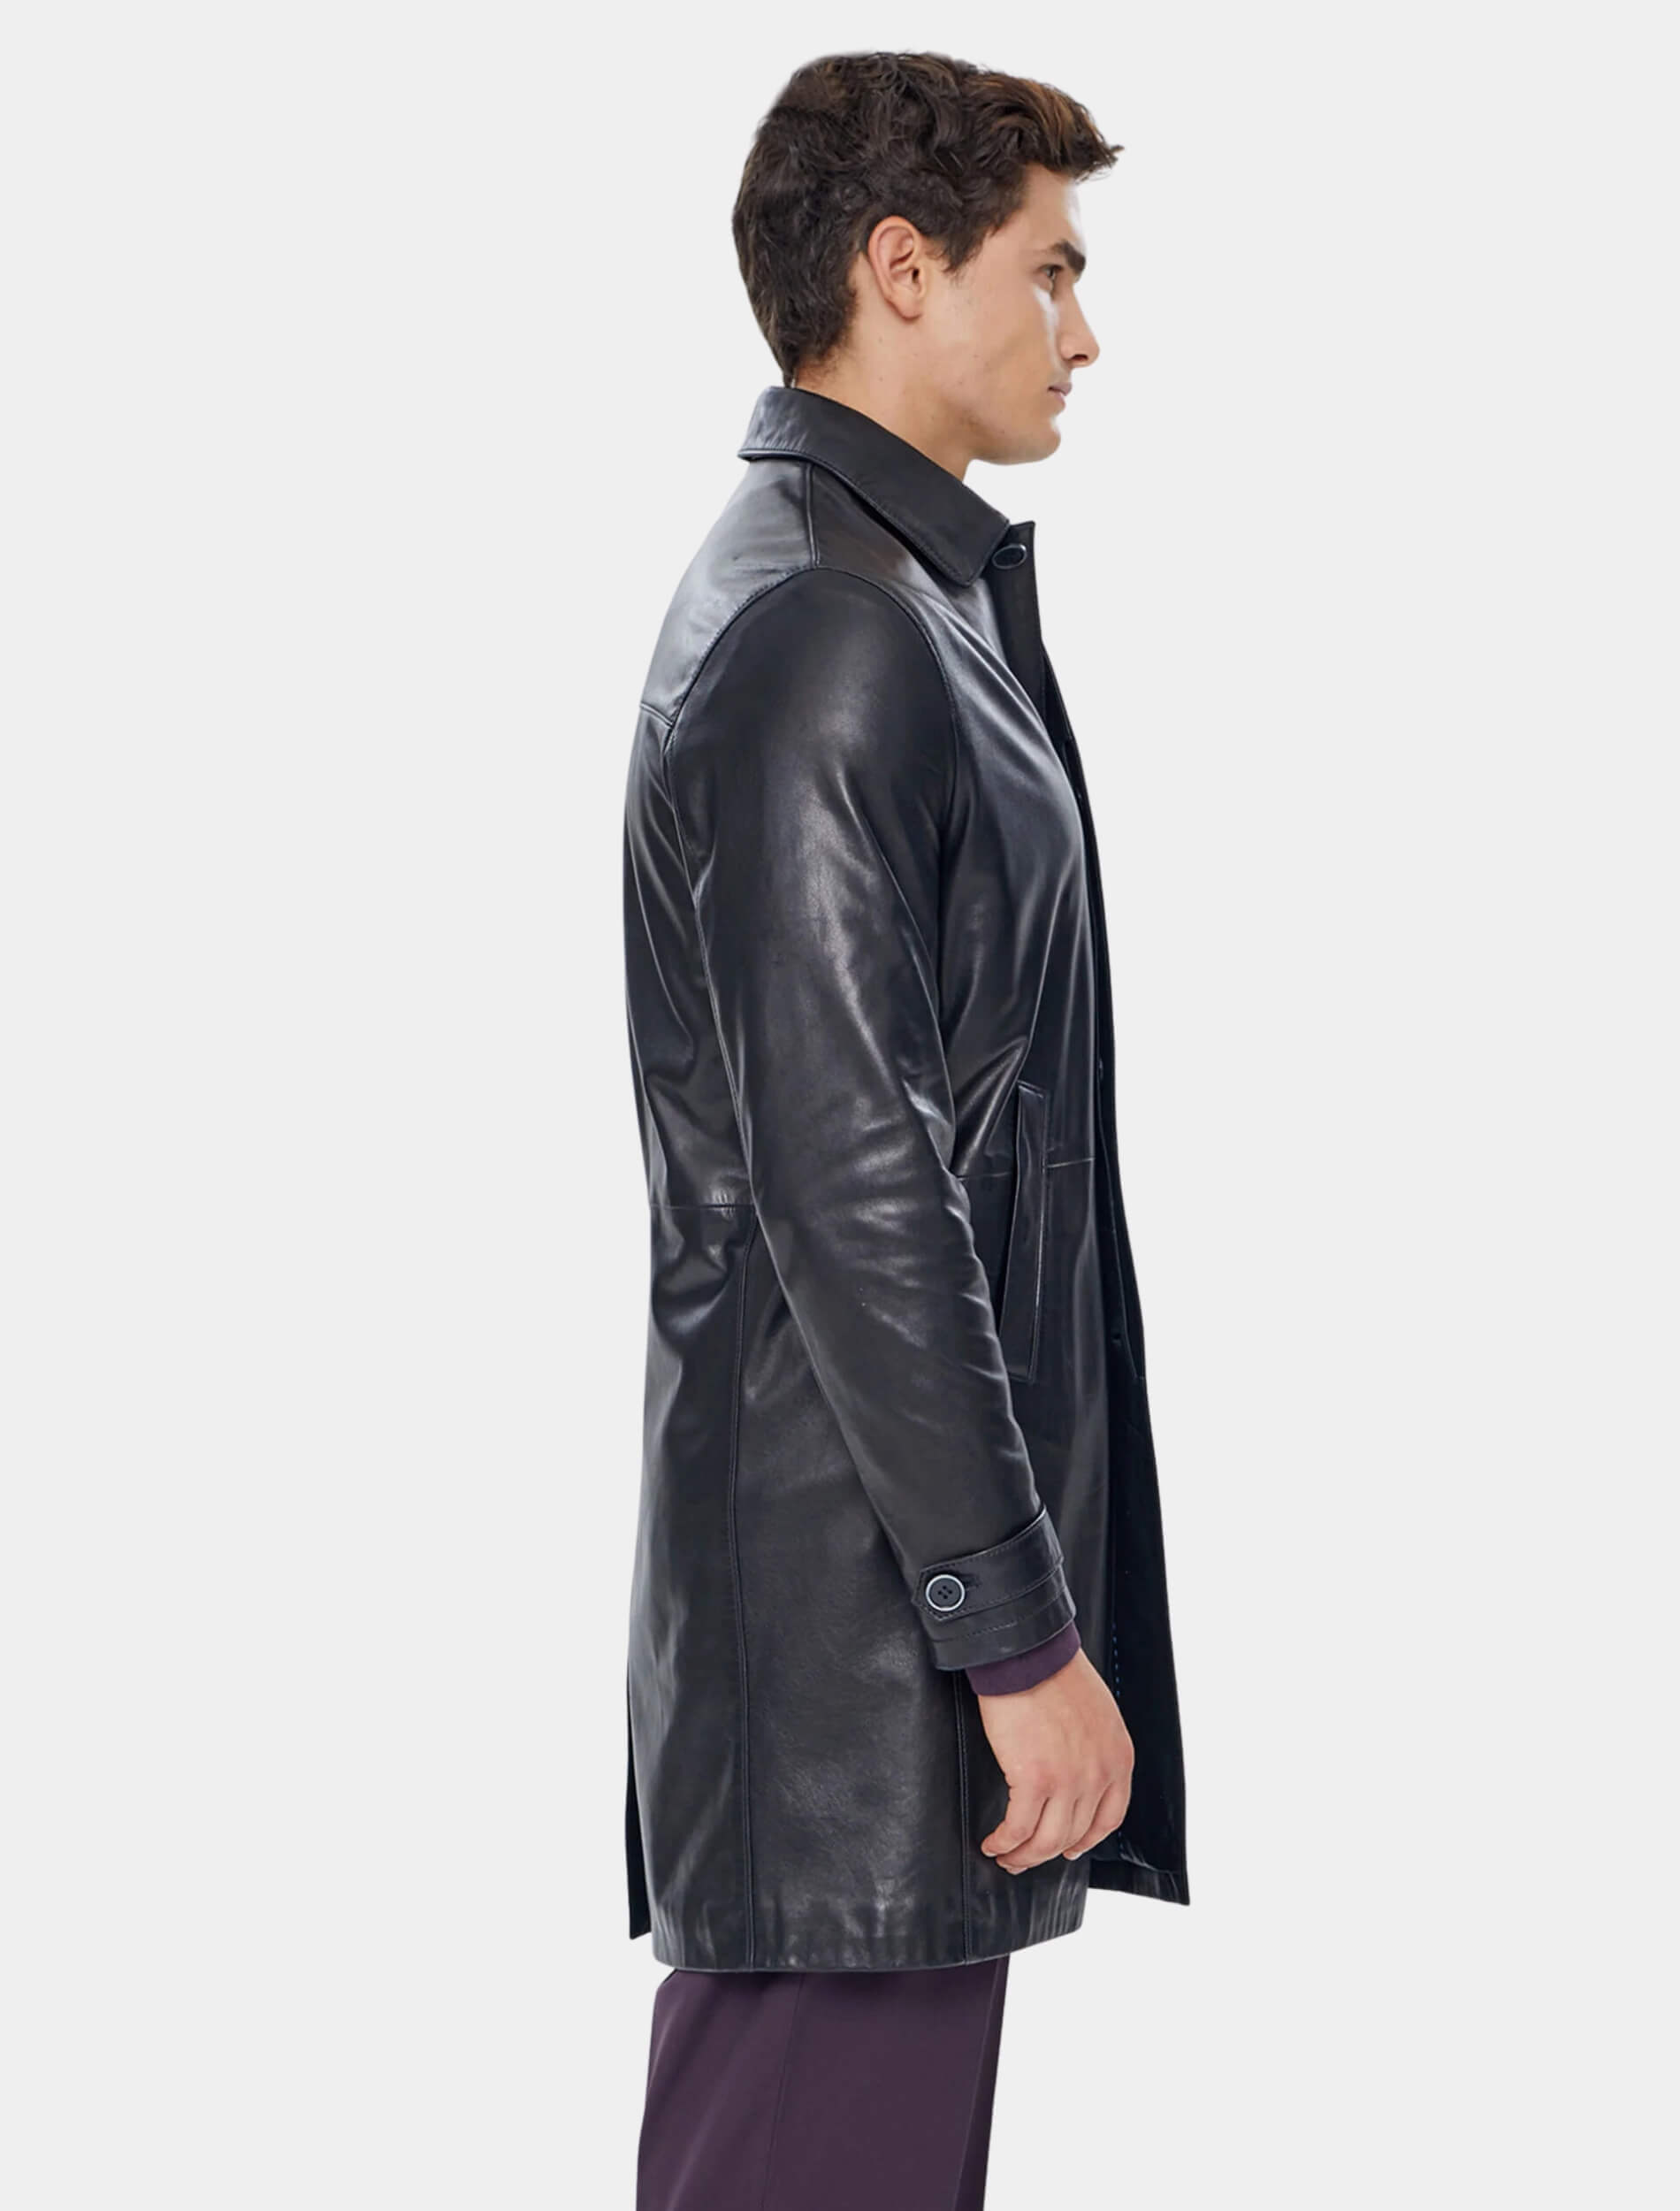 Mens John Black Leather Trench Coat Side Pose